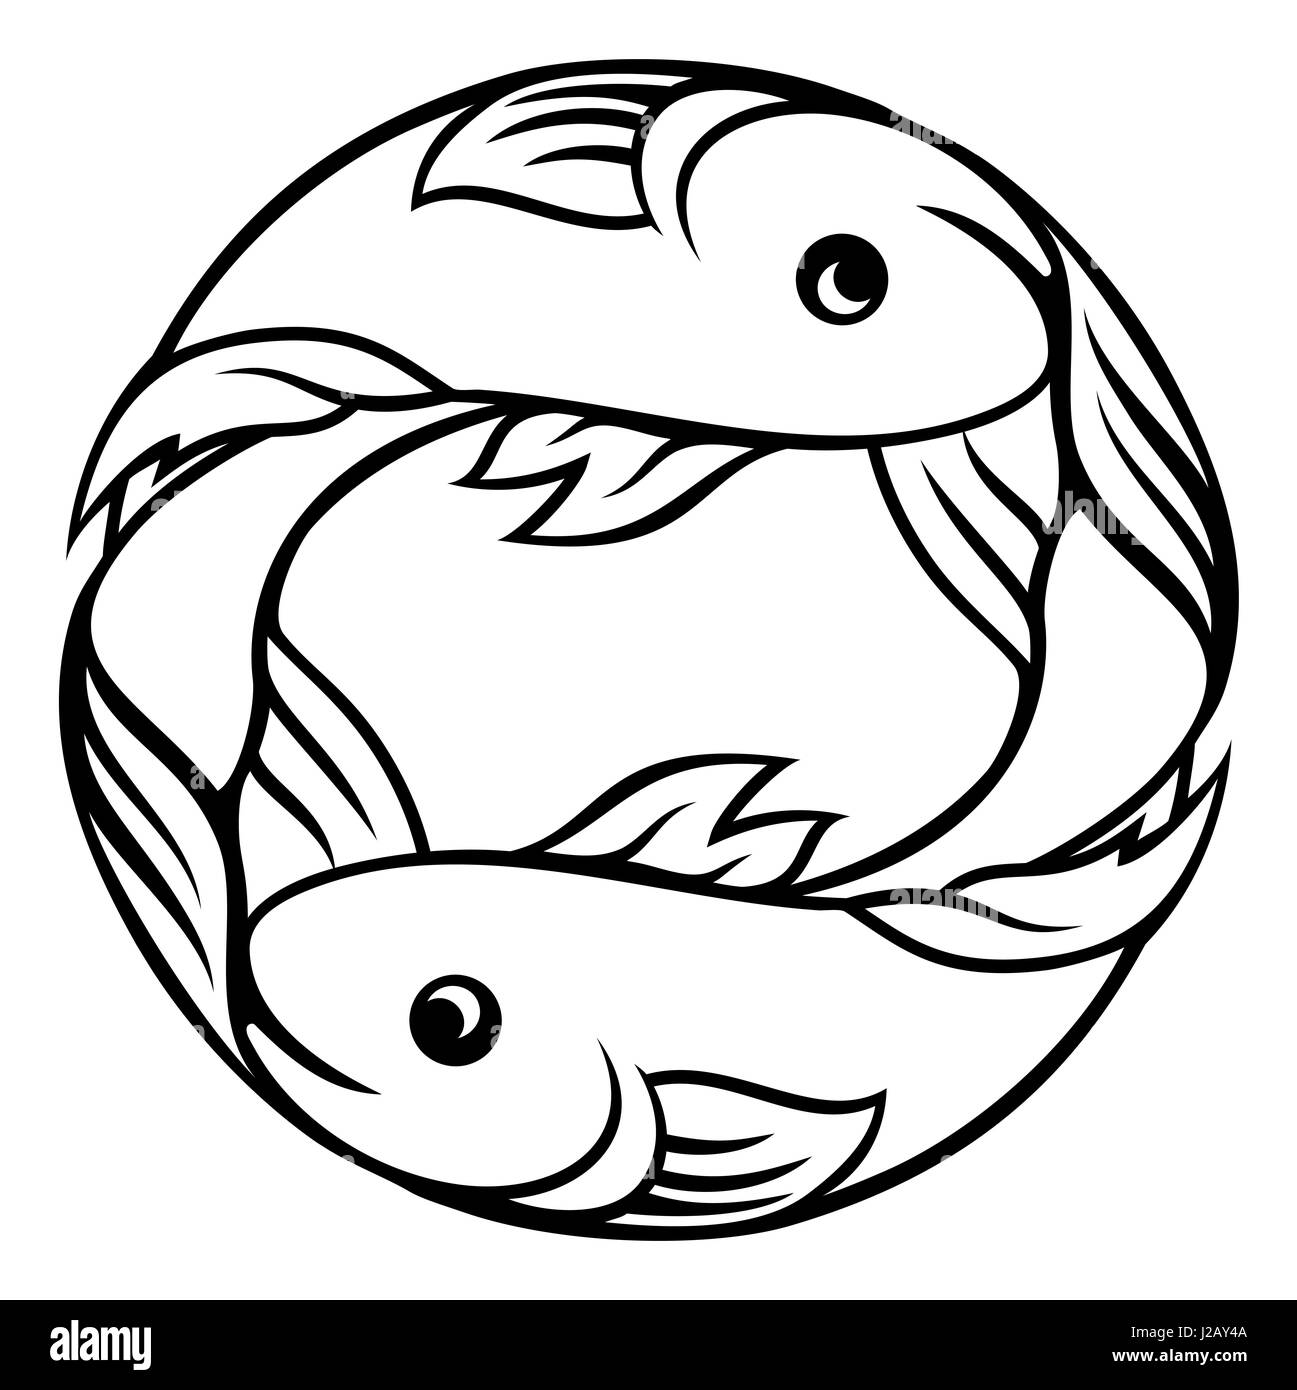 A Pisces fish horoscope astrology zodiac sign symbol Stock Photo